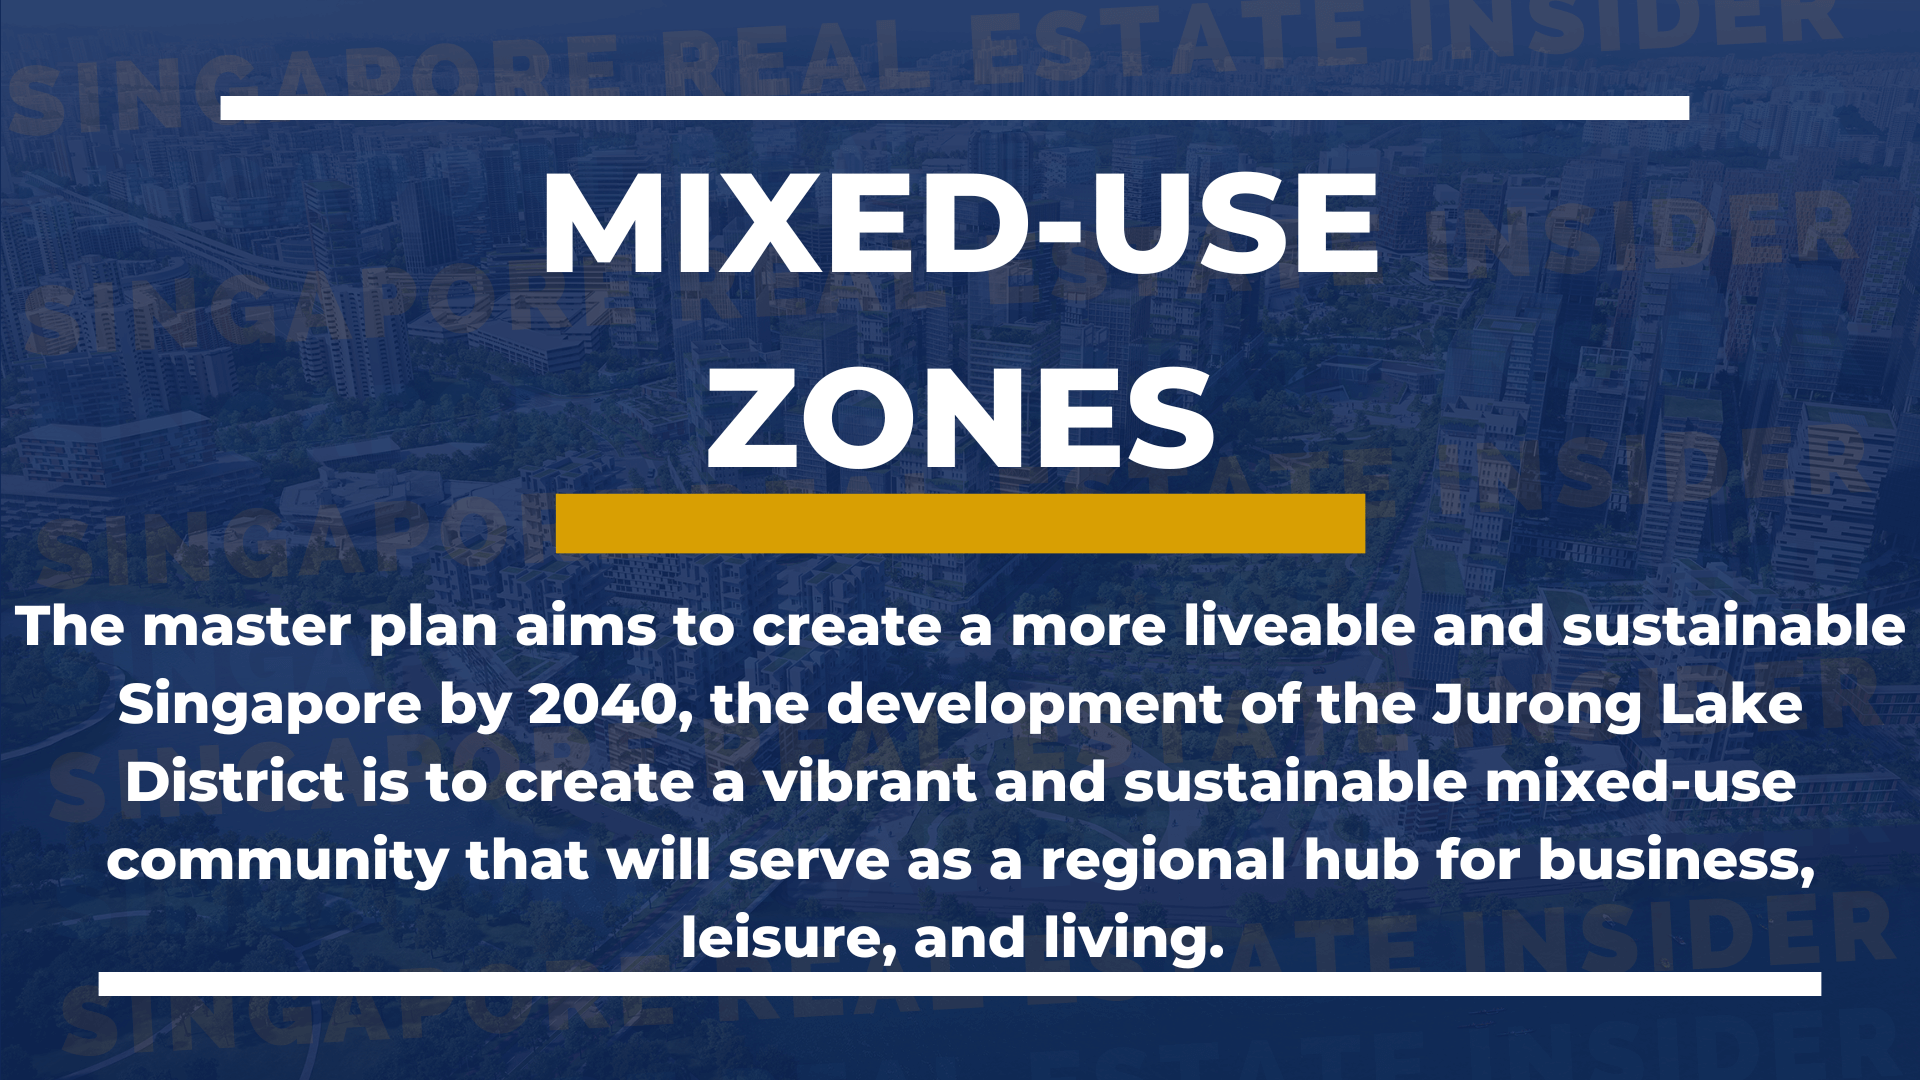 Mixed-use zones